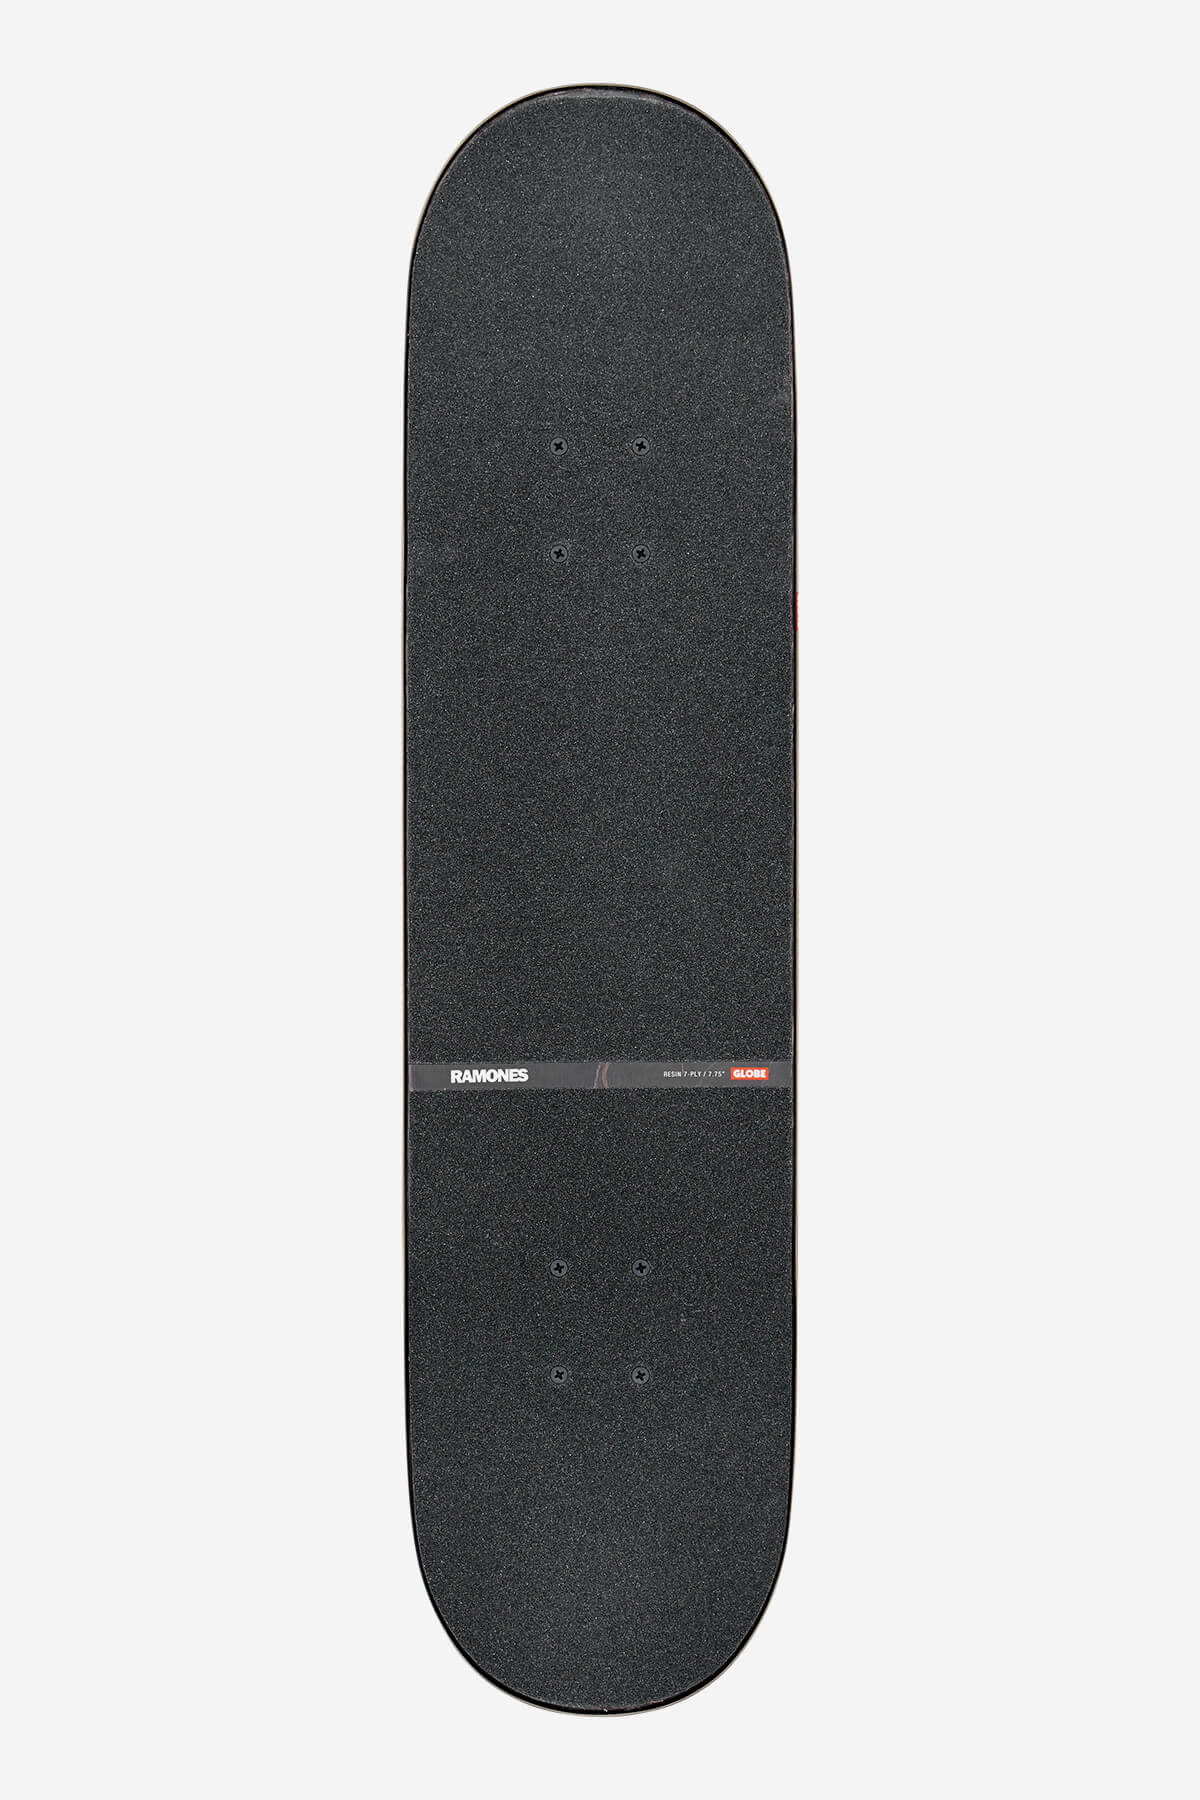 g2 ramones ramones 7,75" completo skateboard